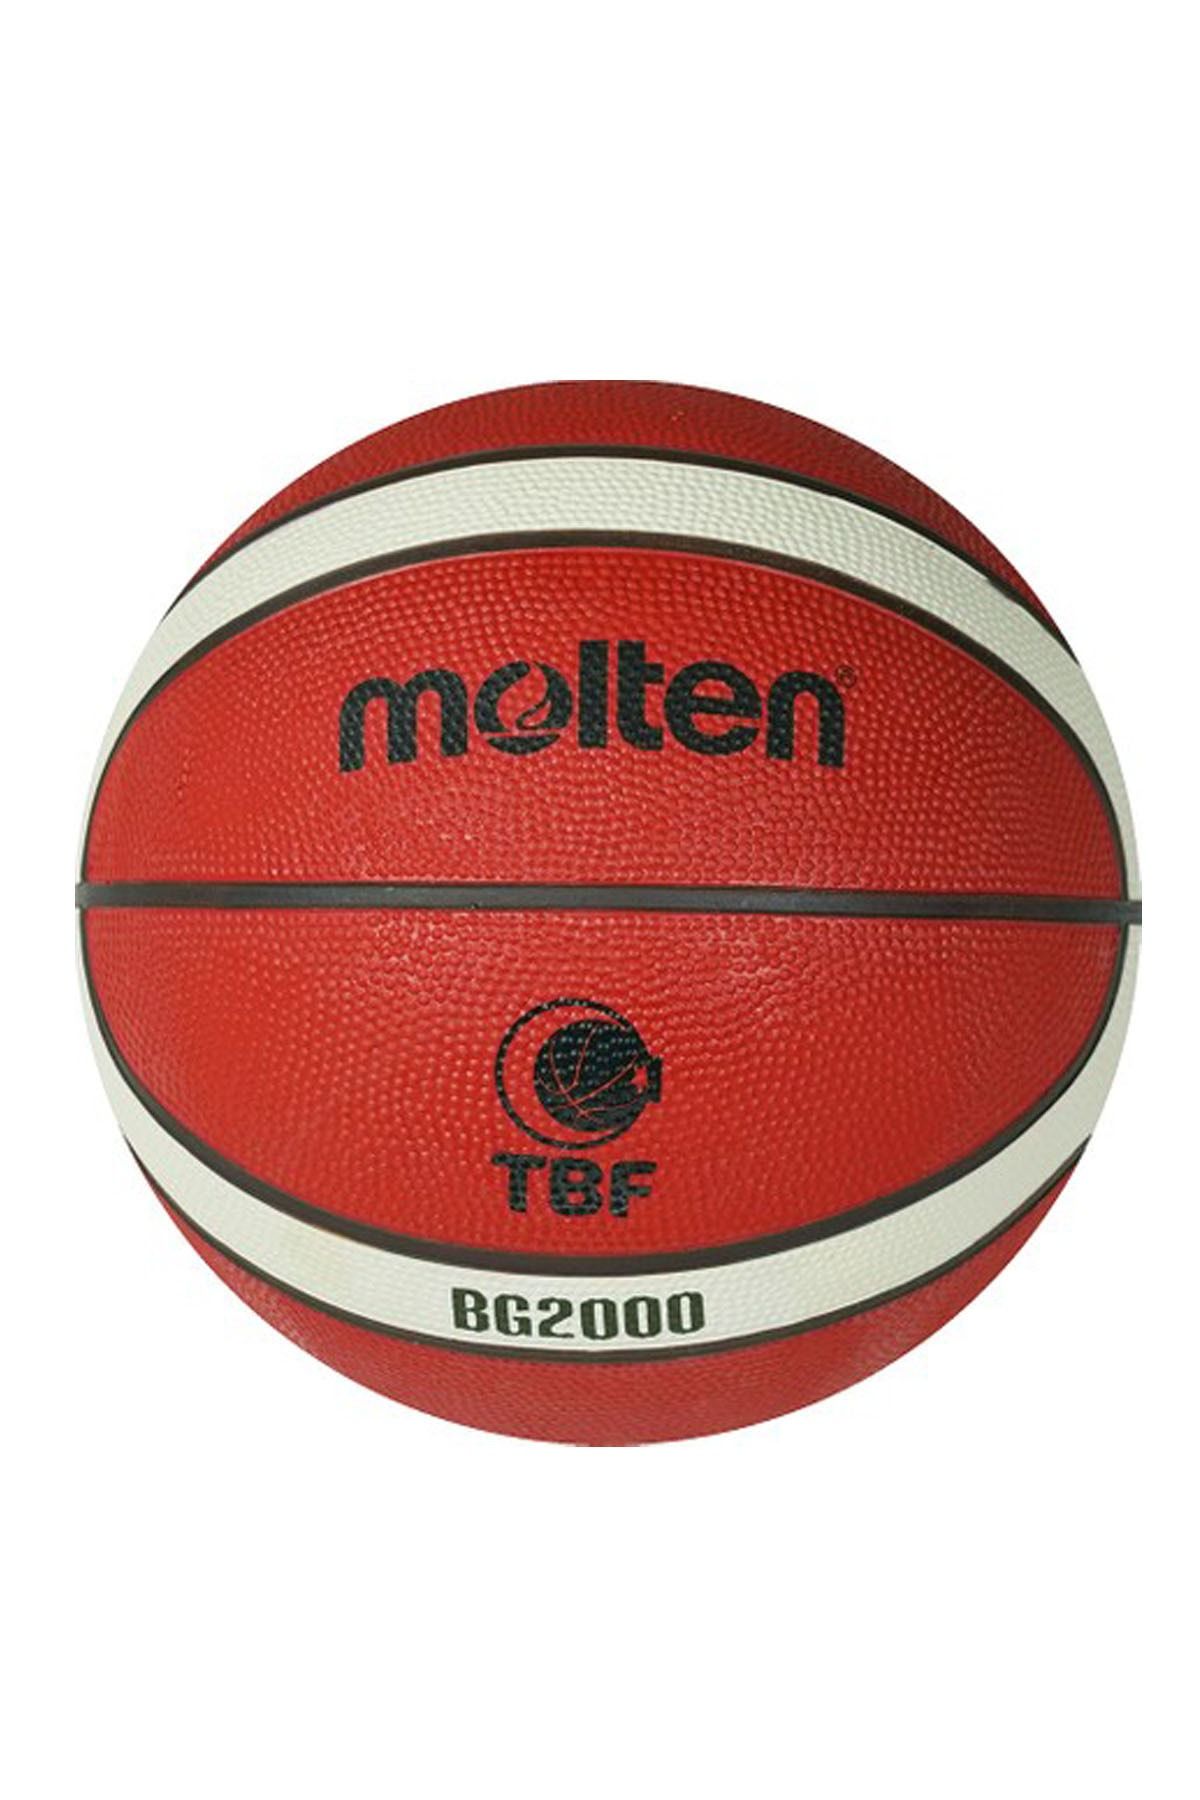 Molten B7g2000 Fıba Onaylı Kauçuk 7 No Basketbol Topu